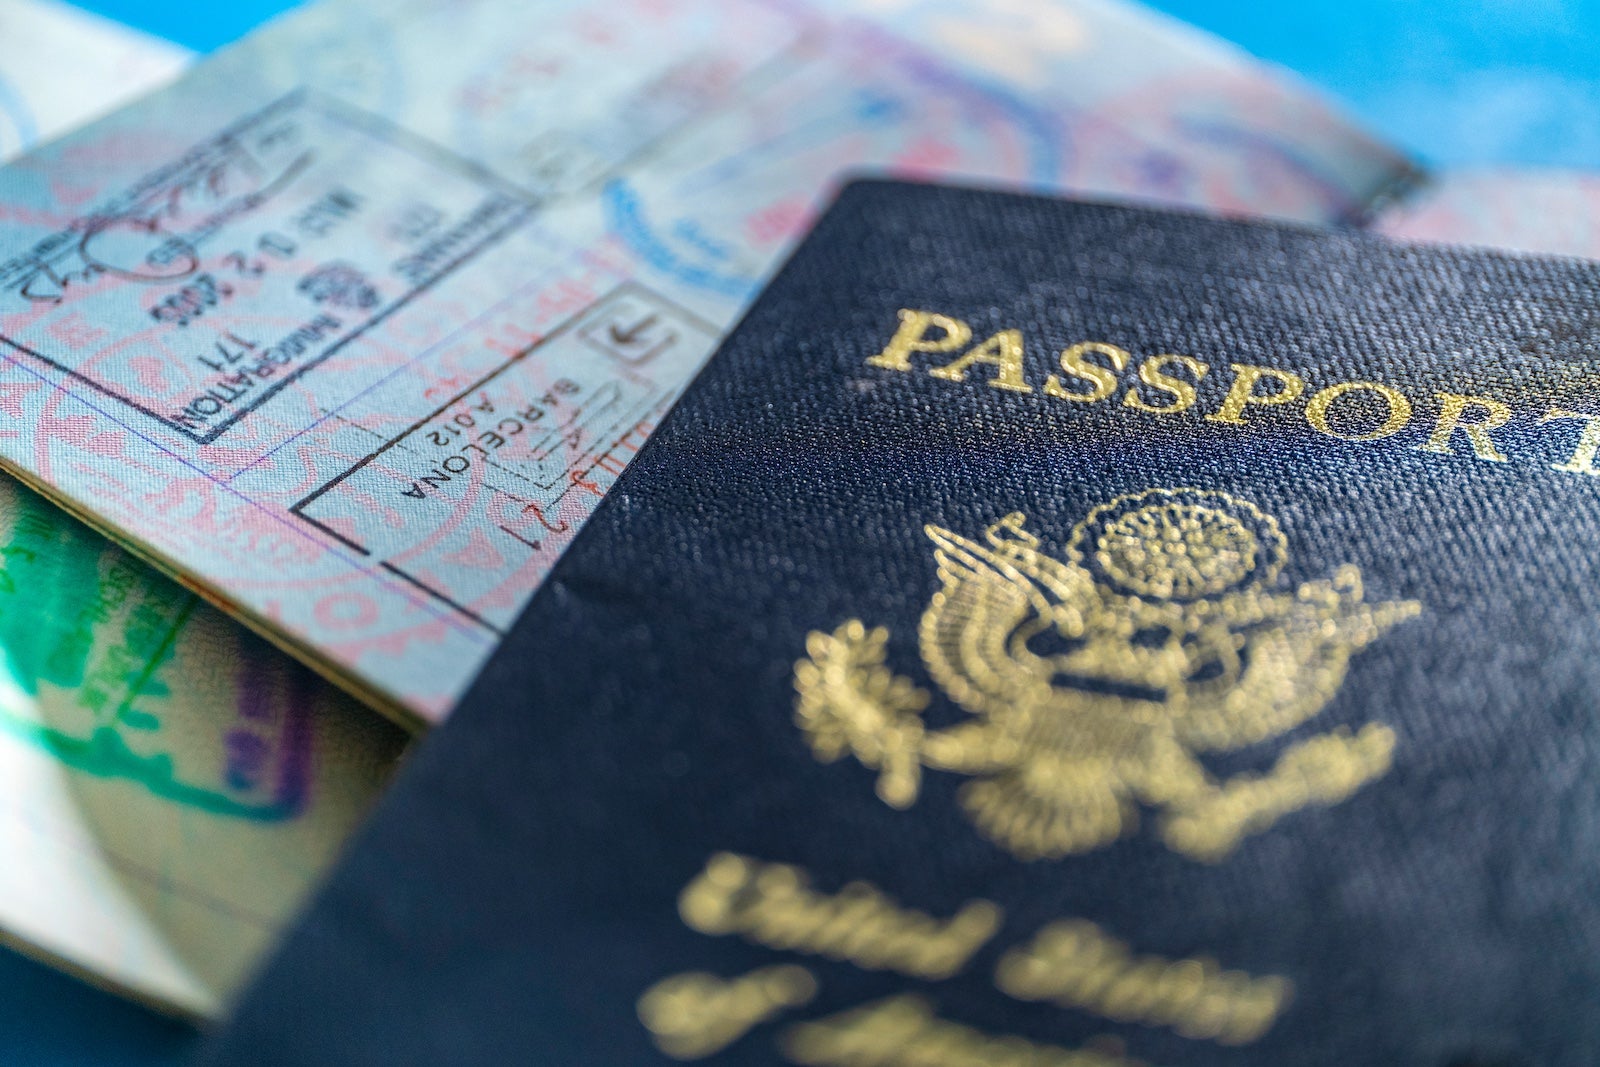 axa travel insurance lost passport